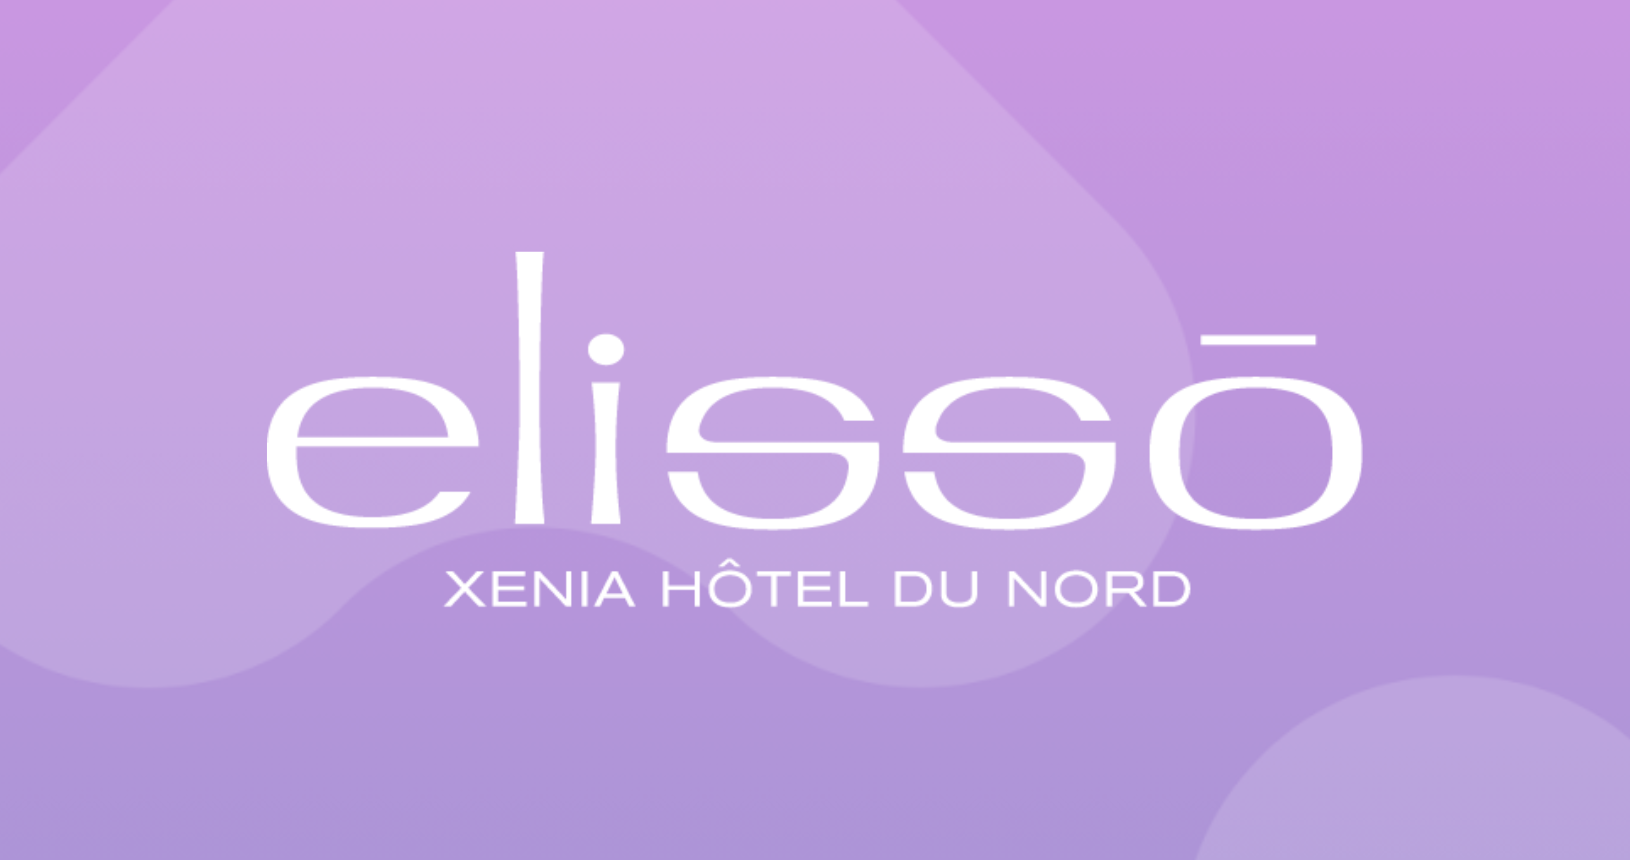 Elisso Xenia Hotel